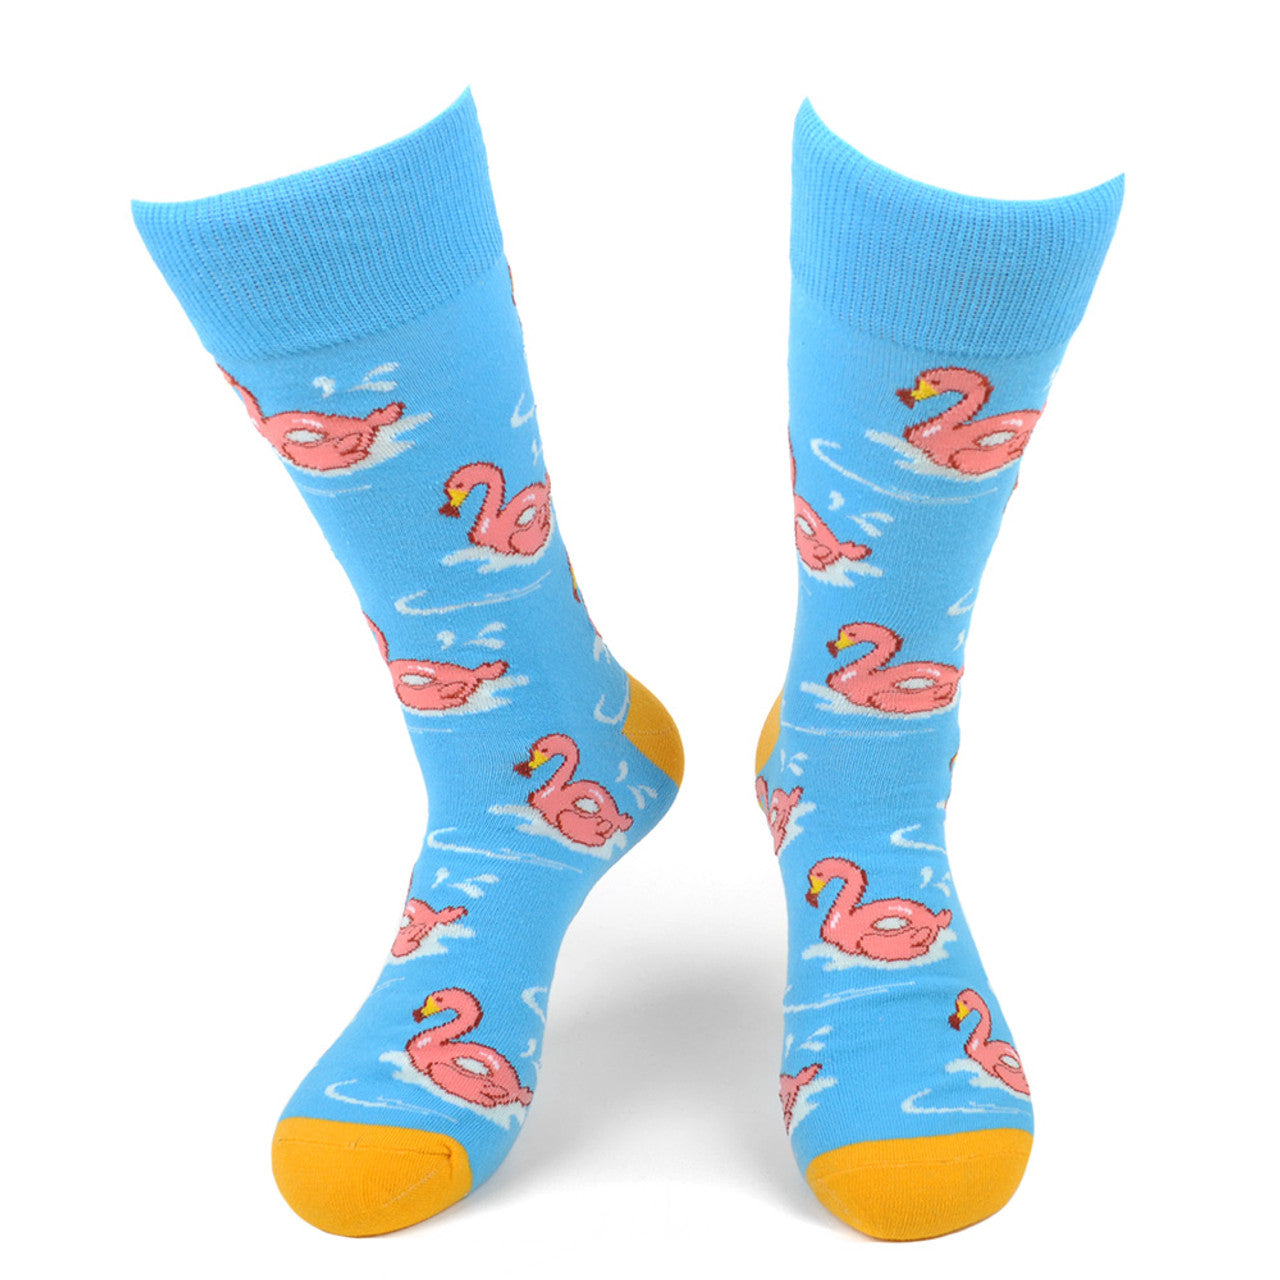 Men's Novelty Crew Socks - Flamingos - Blue & Yellow